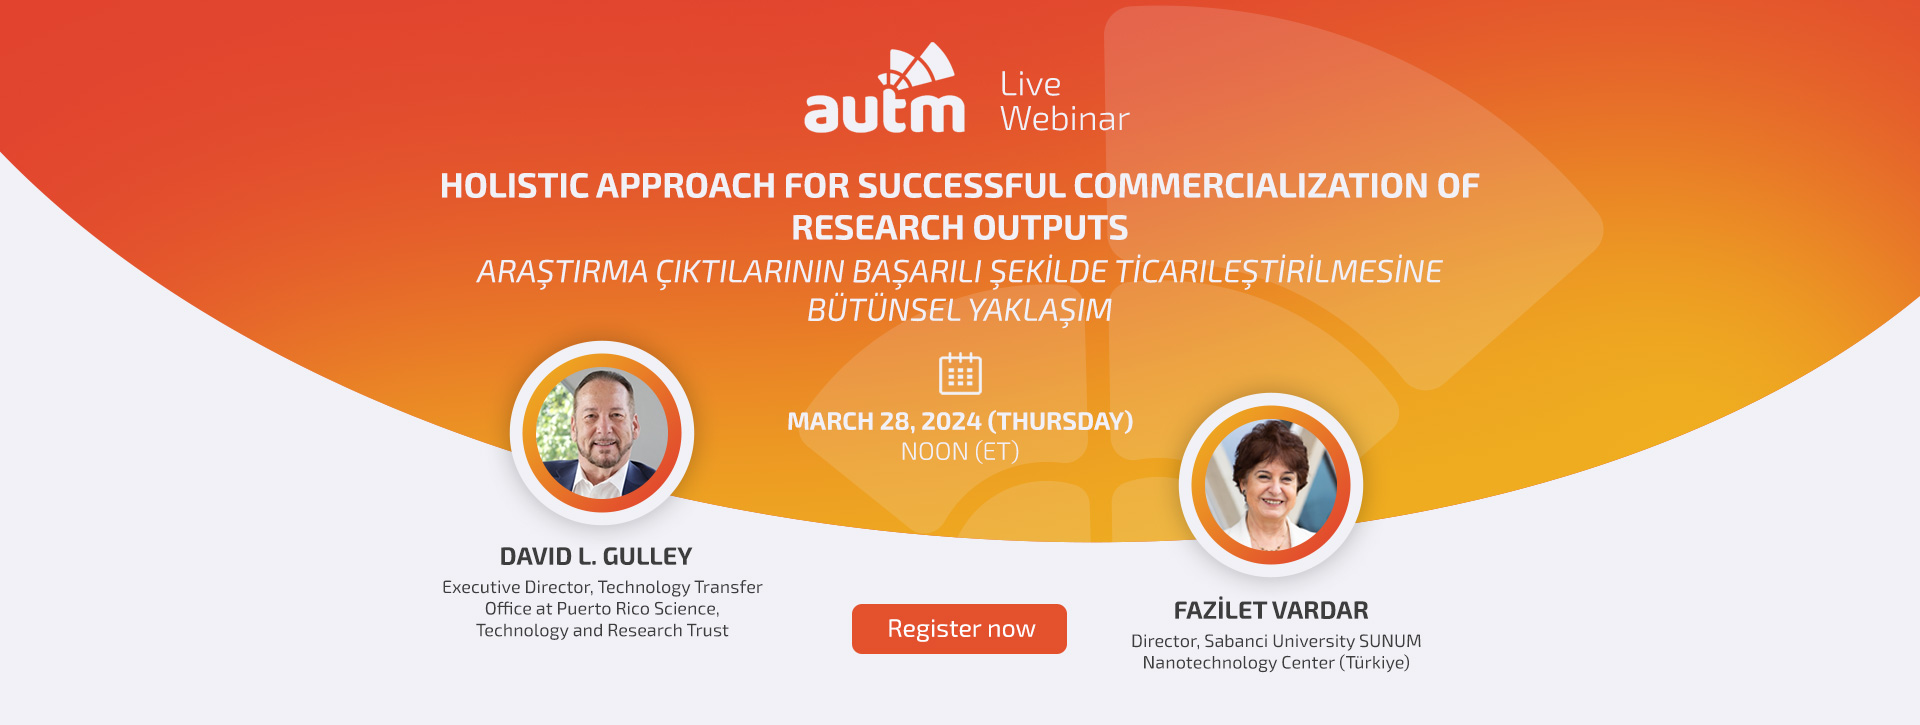 SUNUM Director Fazilet Vardar Sukan will speak at the AUTM Webinar on March 28.